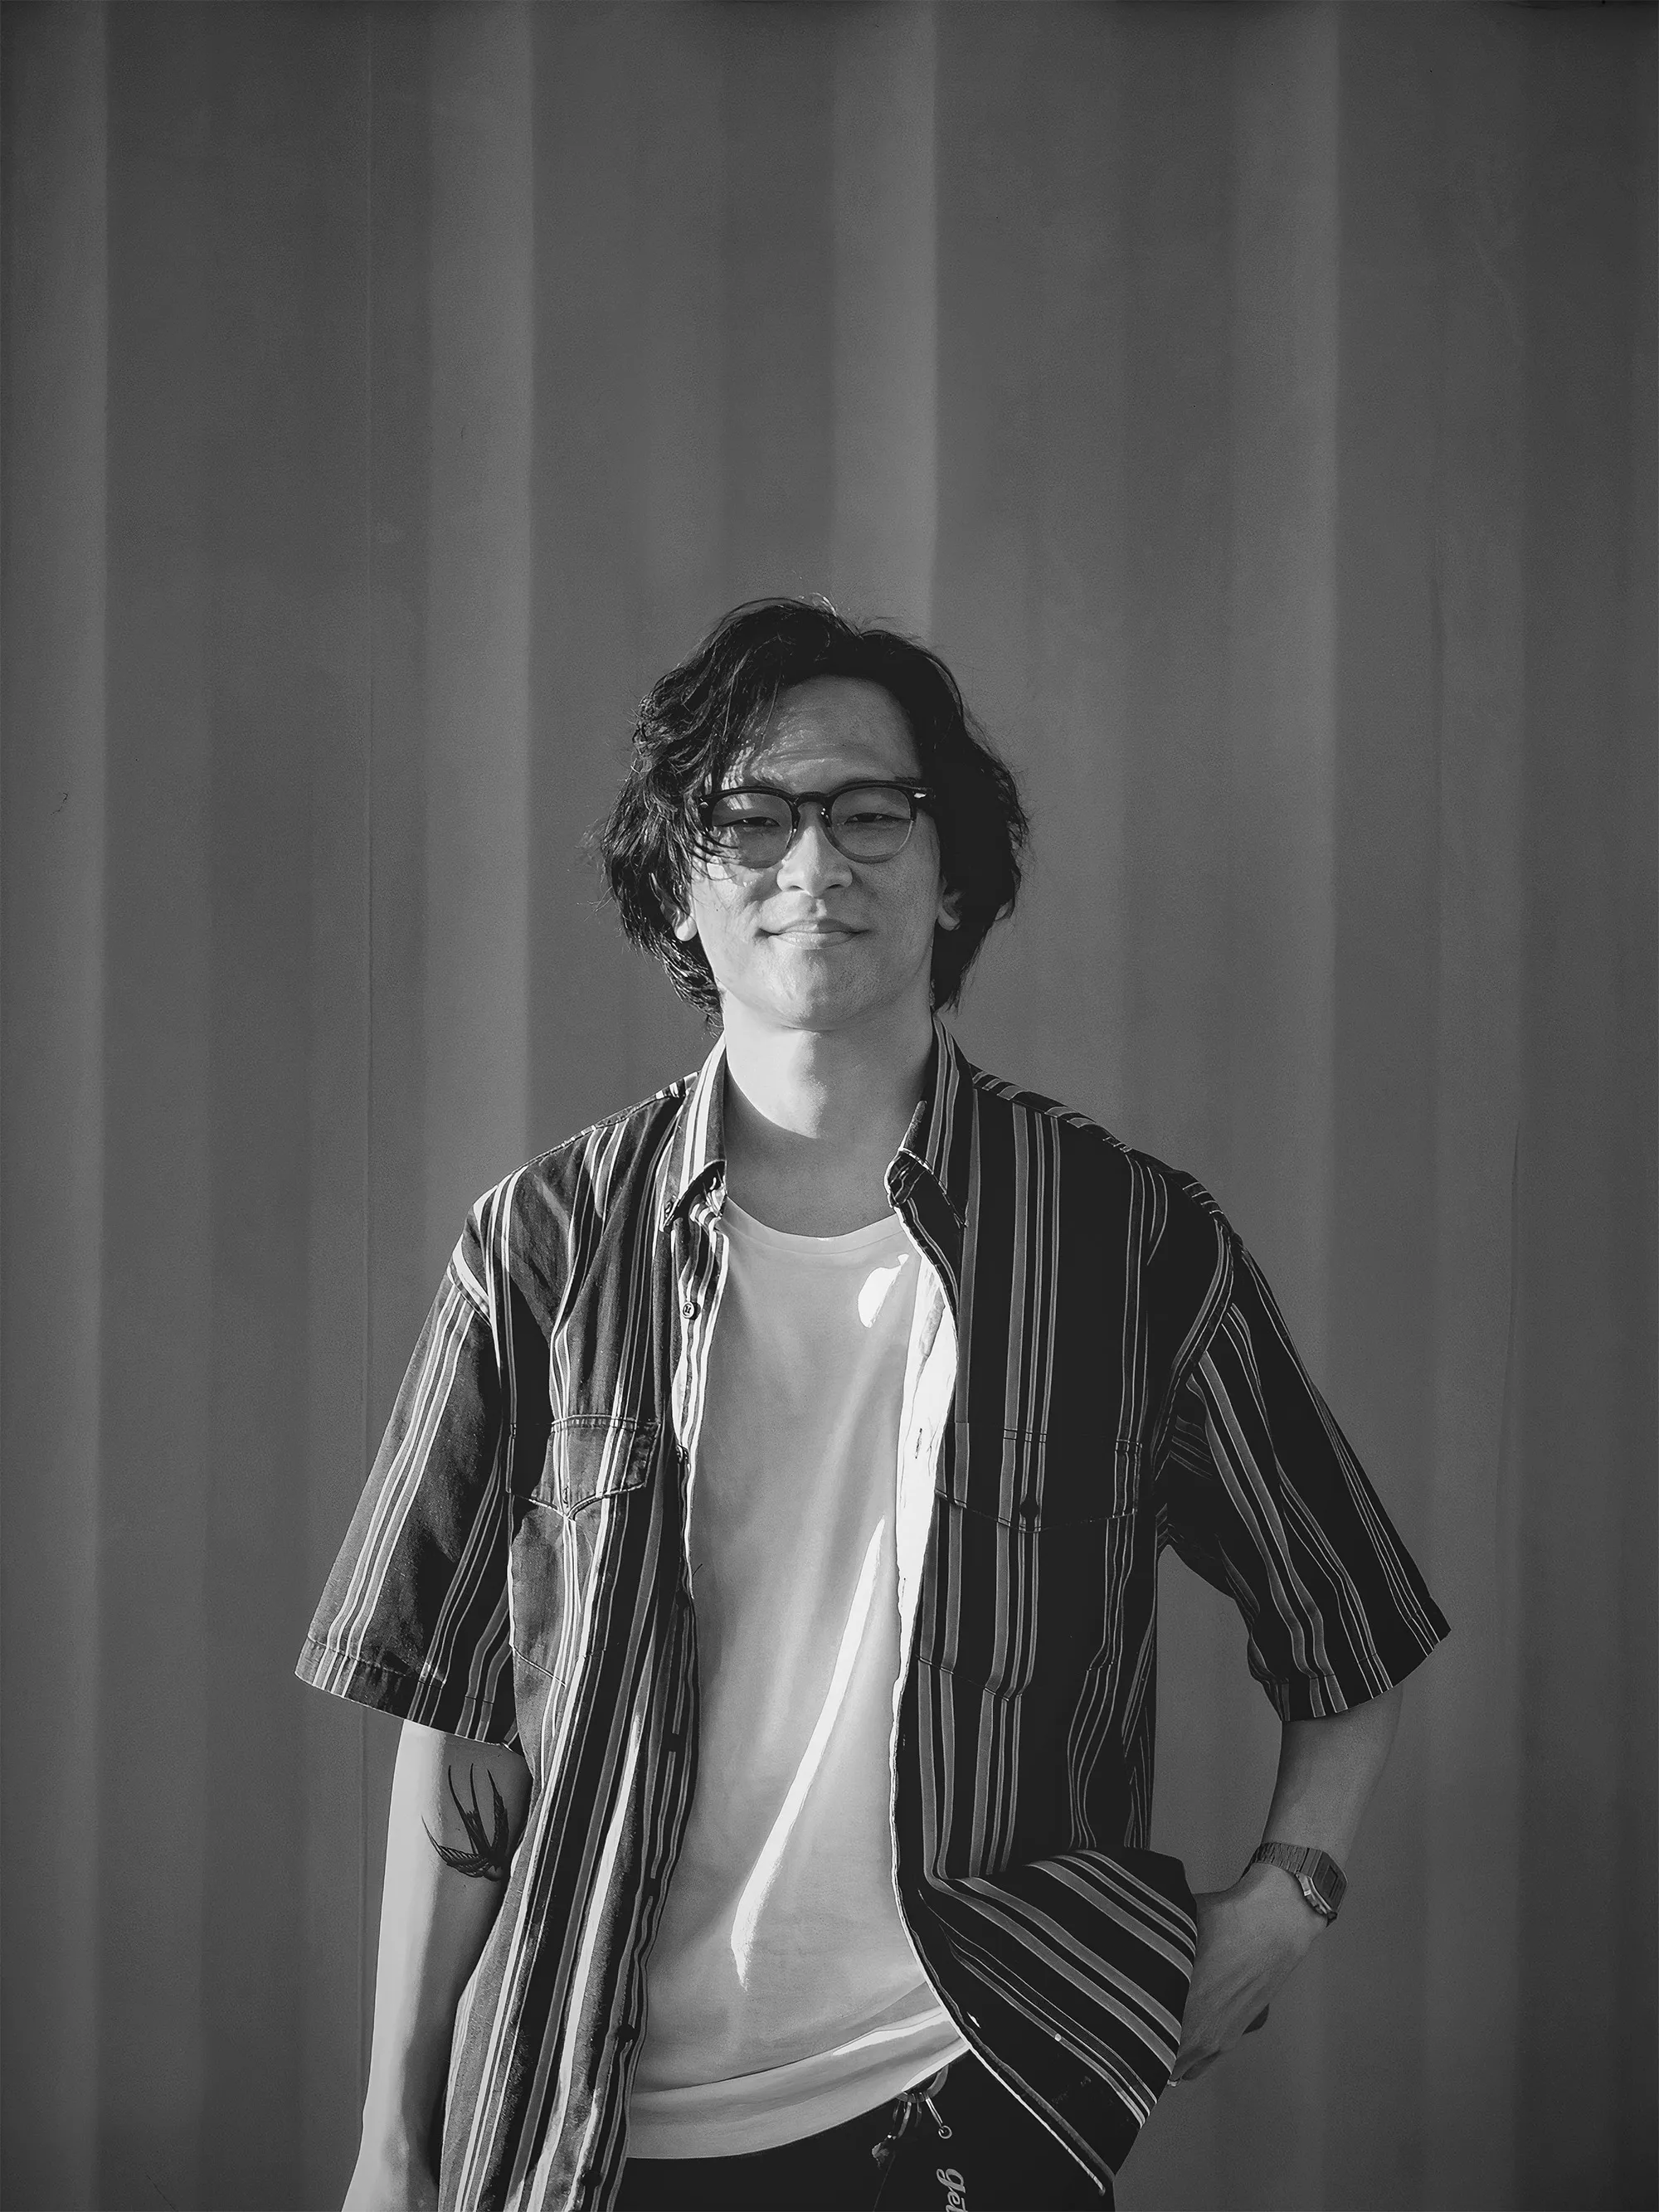 A portrait of Calvin Lau in black and white.